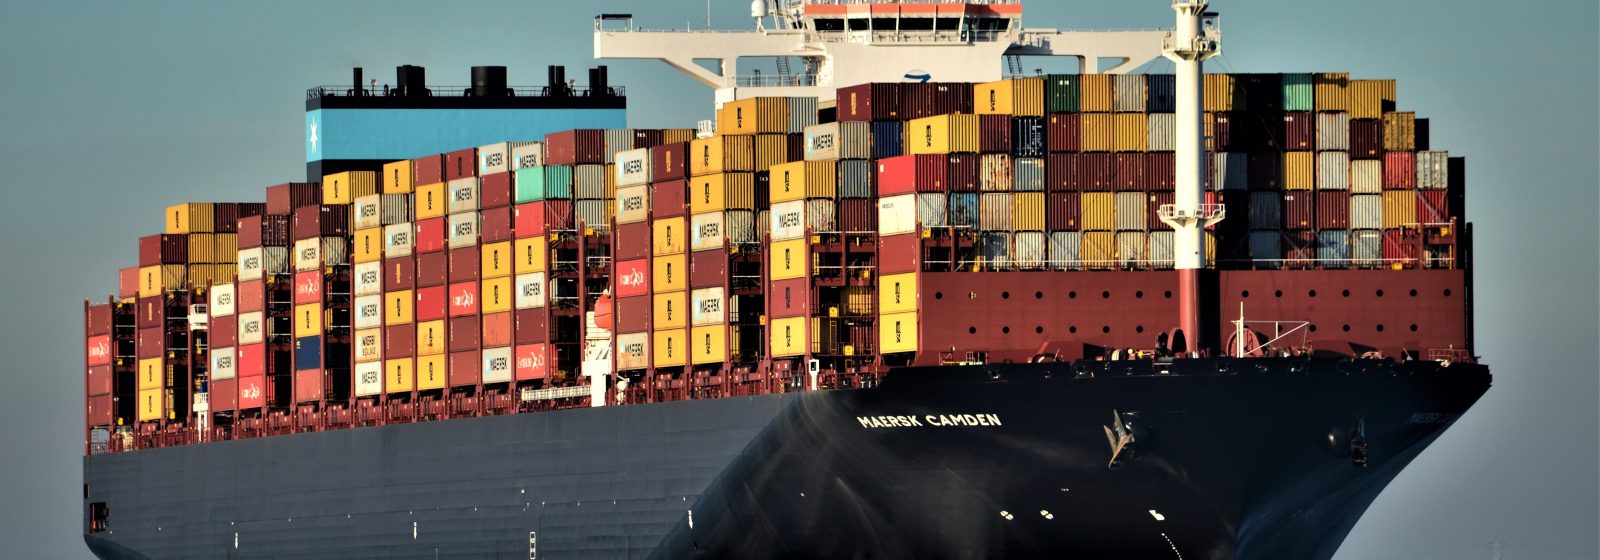 Containerschip ‘Maersk Camden’ opvarend op de Westerschelde